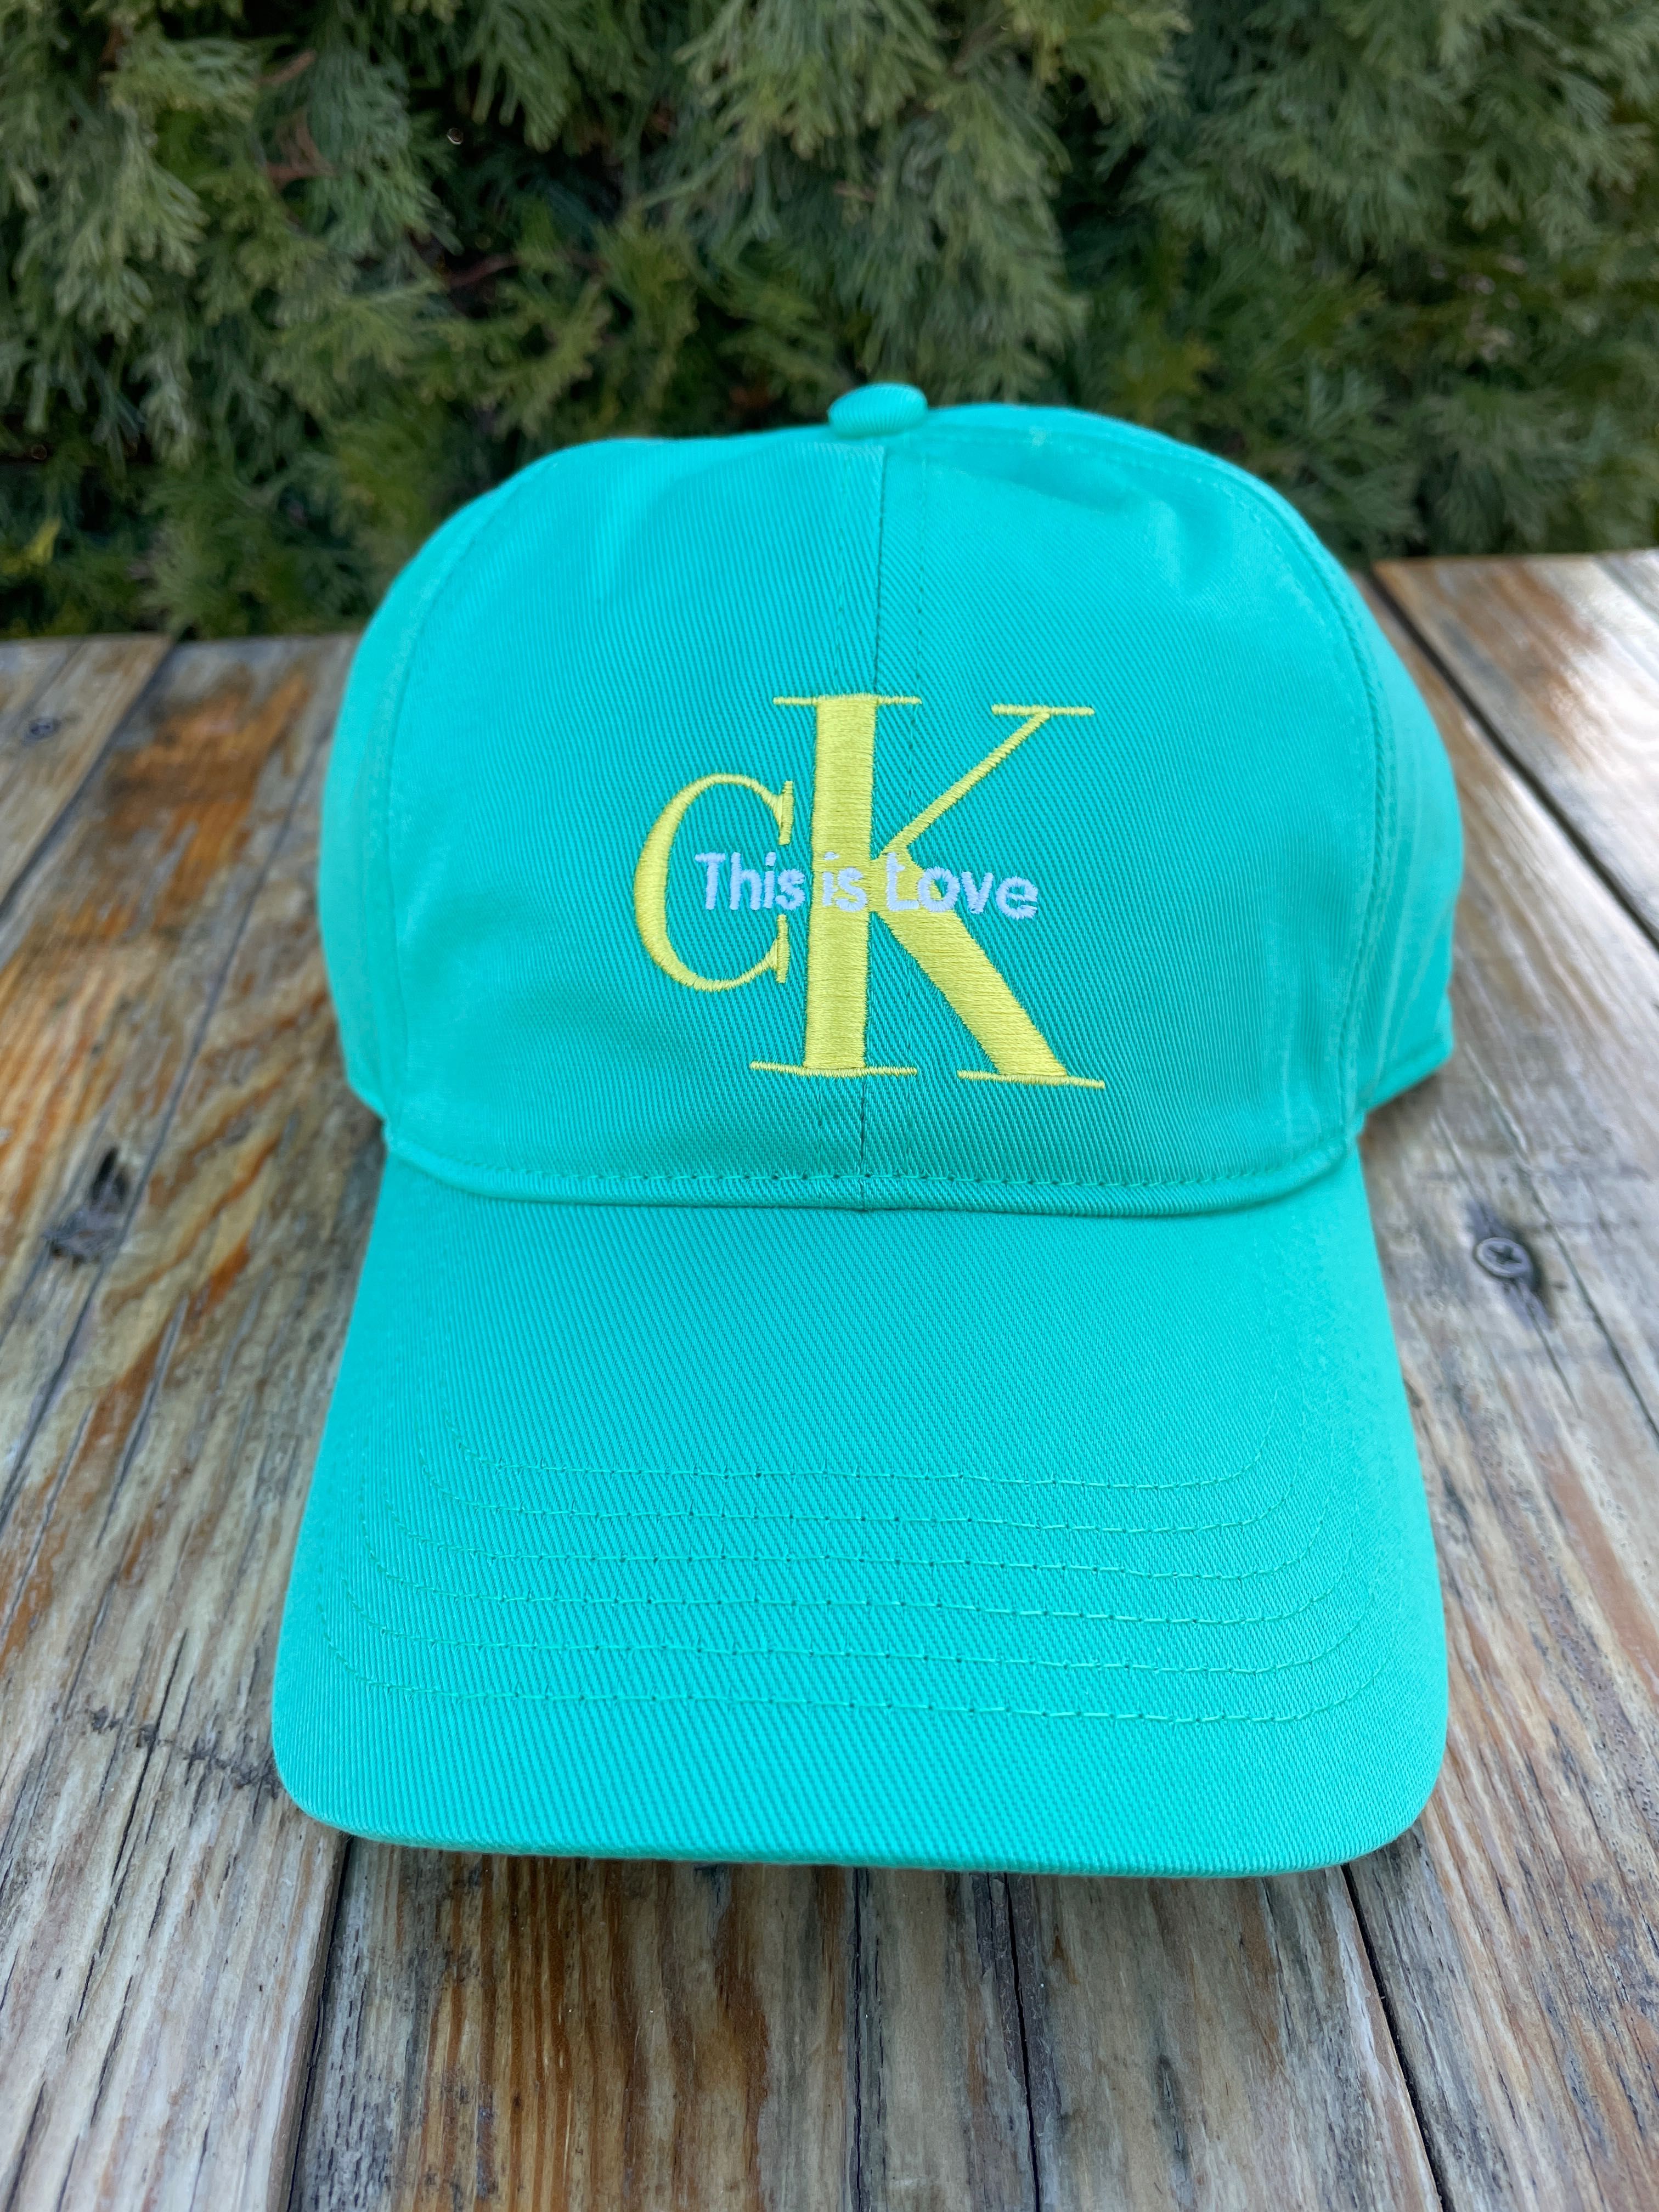 Новая кепка calvin klein бейсболка (ck embroidered logo cap)с америки